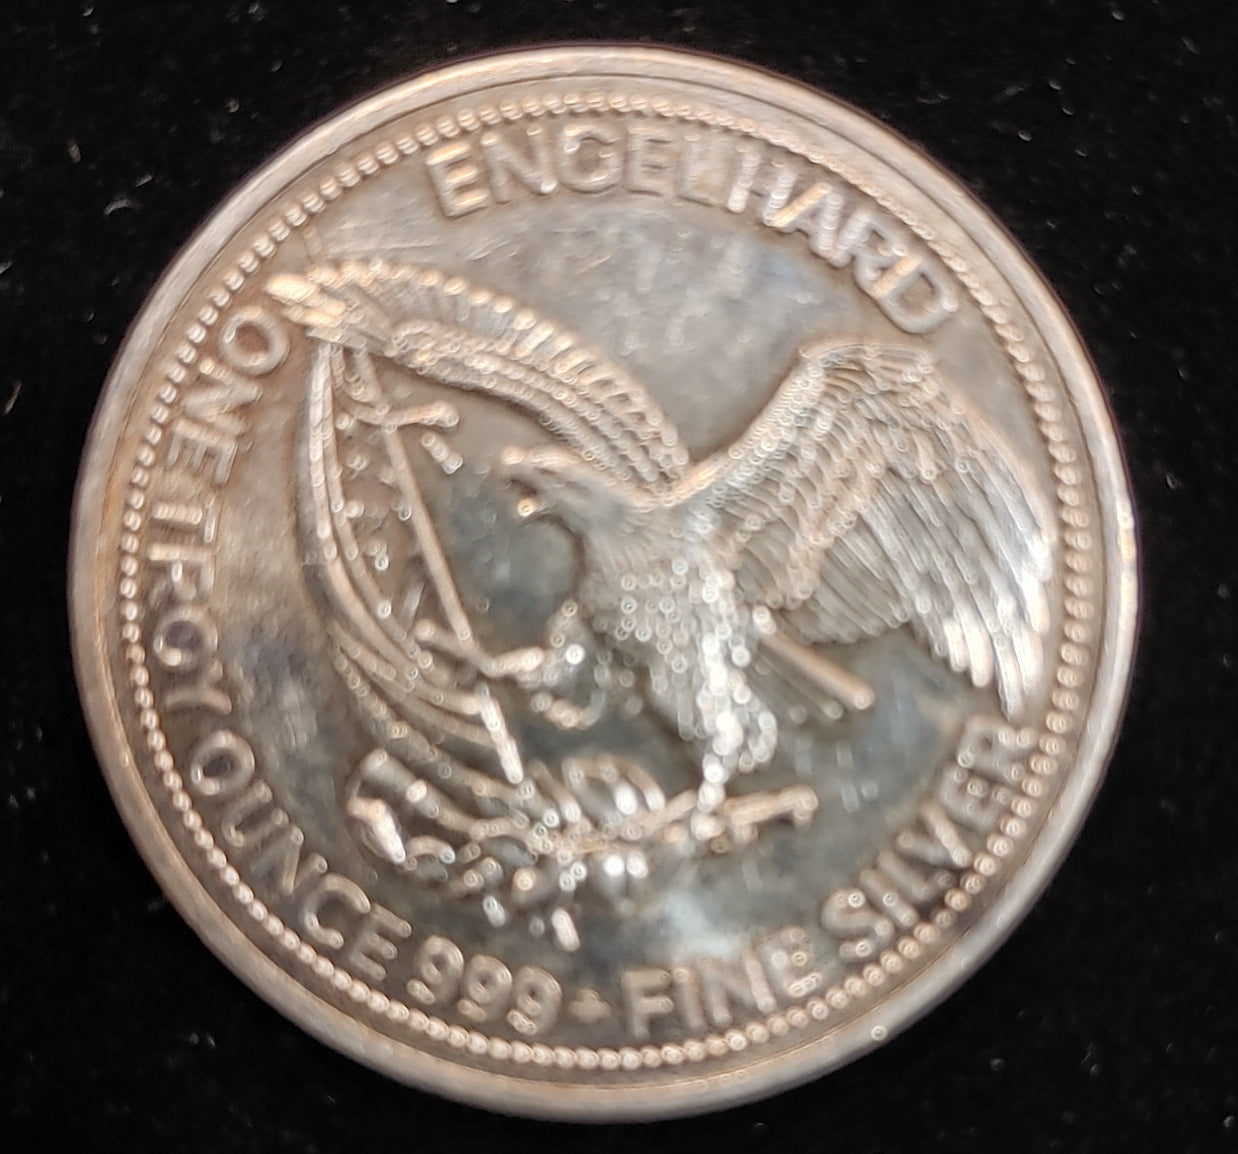 .999 Fine! Silver American Prospector Troy Ounce Bullion Coin 1984 Free Shipping